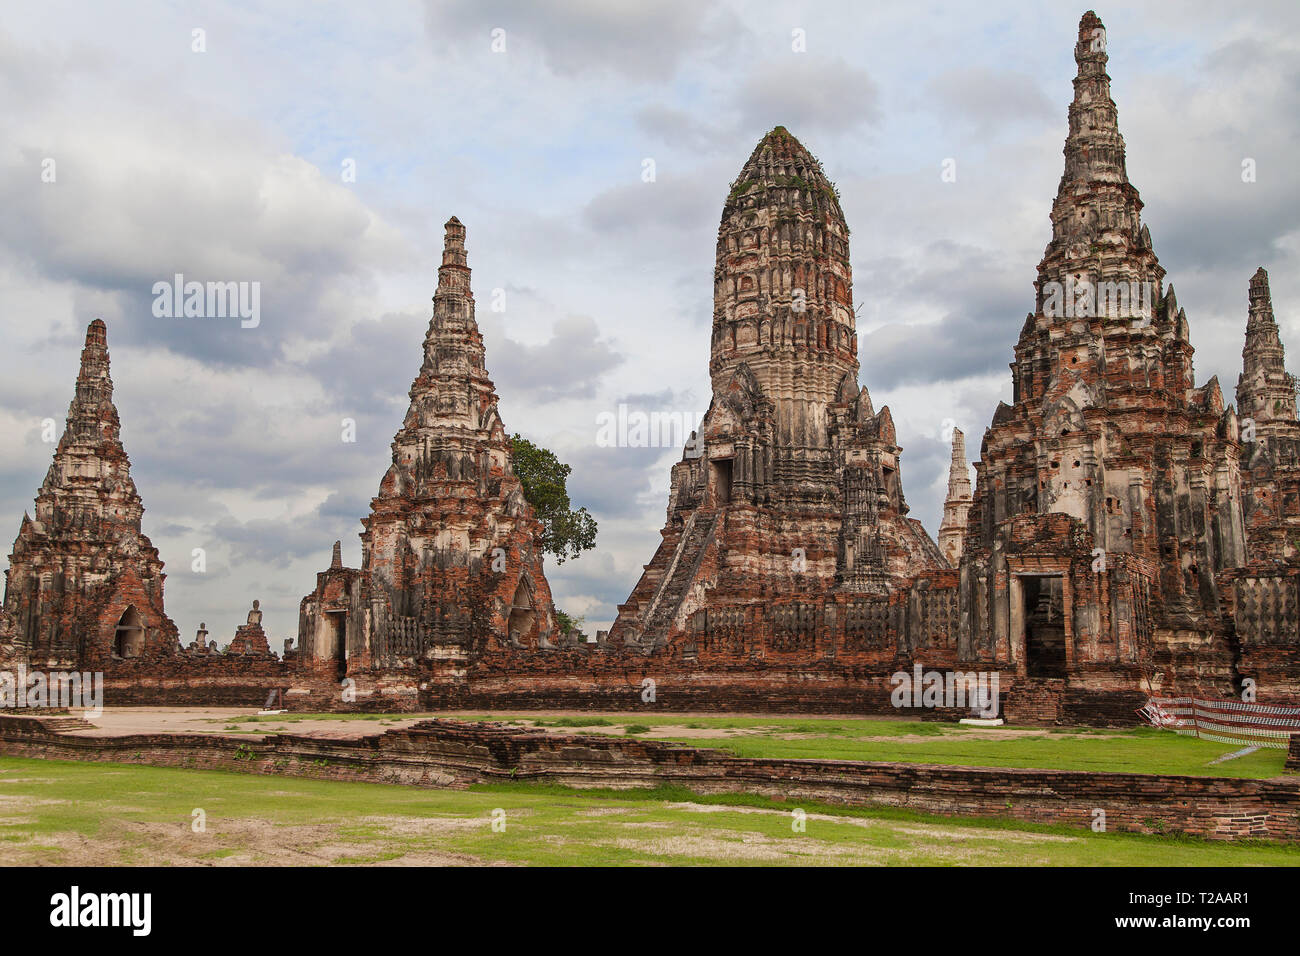 Wat Chaiwatthanaram in Ayutthaya, Thailand. Stock Photo